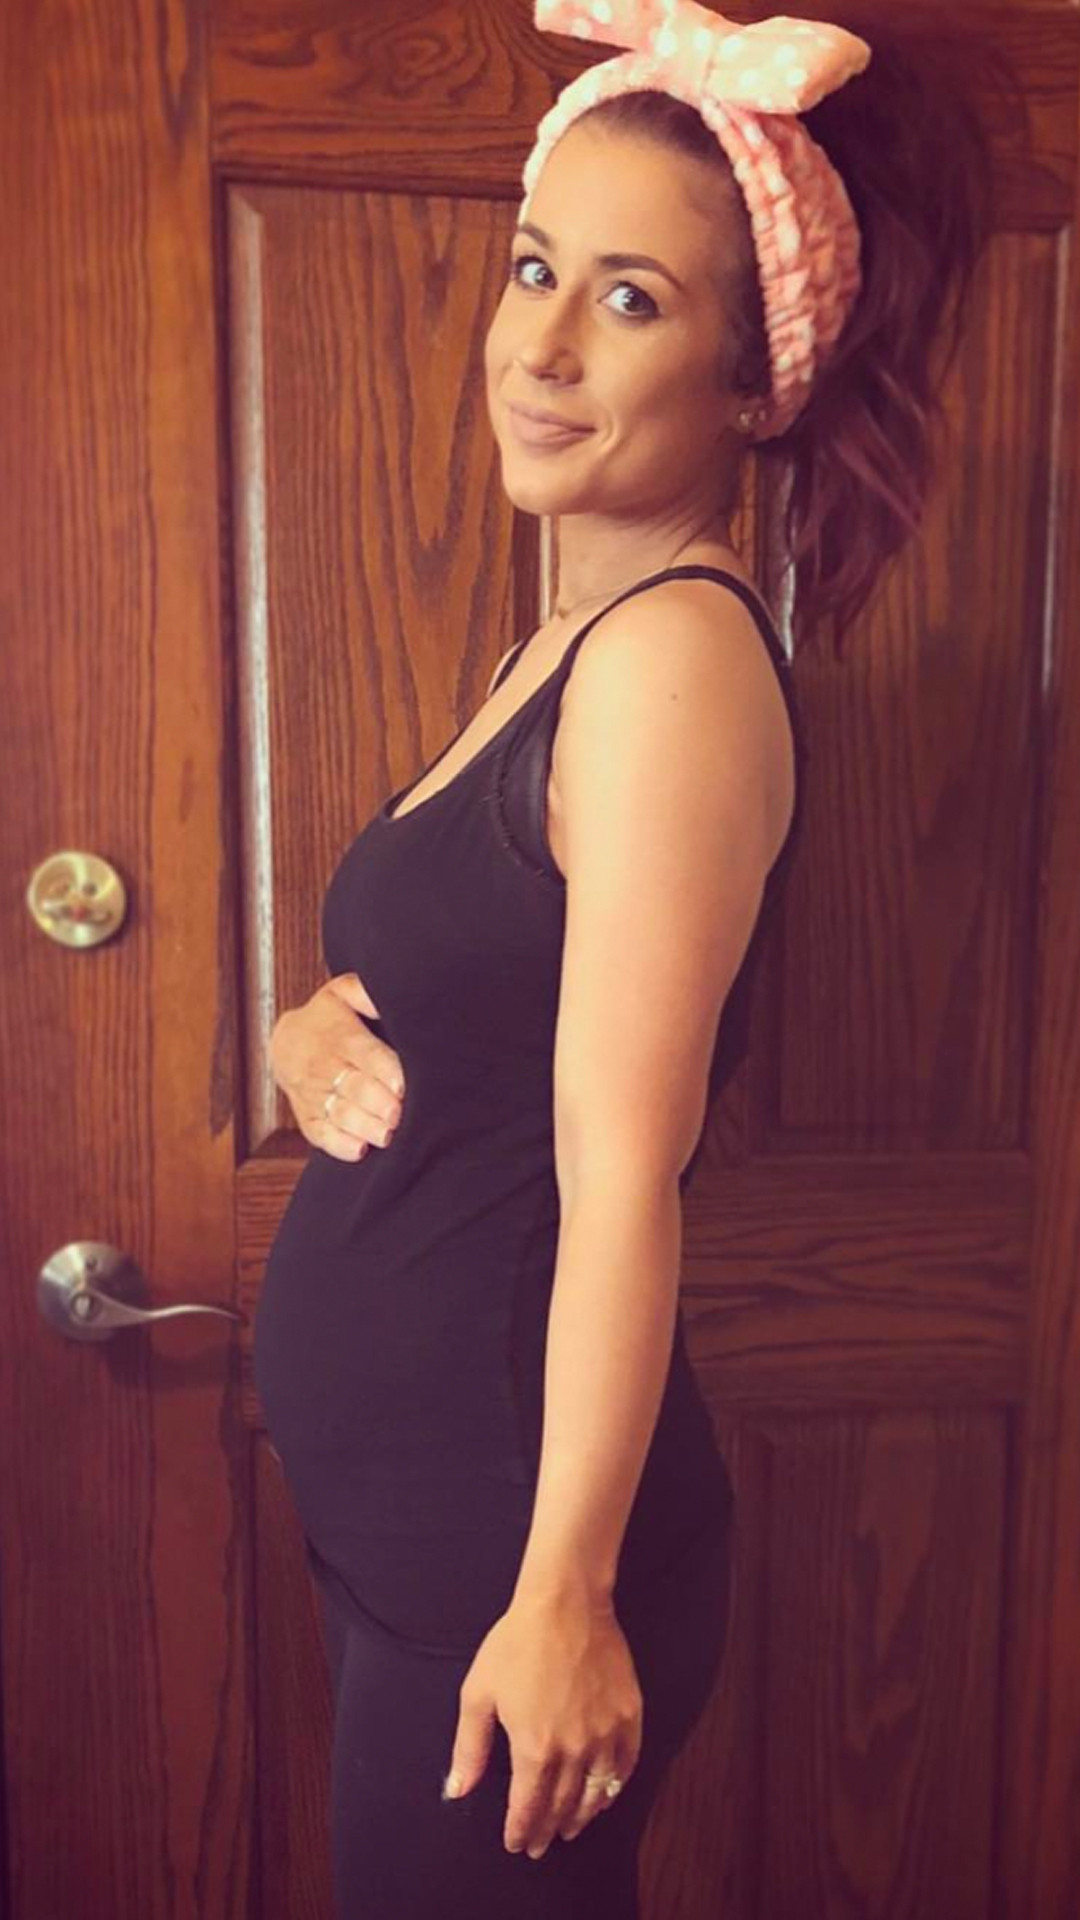 Teen Mom's Chelsea Houska Gives Birth to Baby No. 3